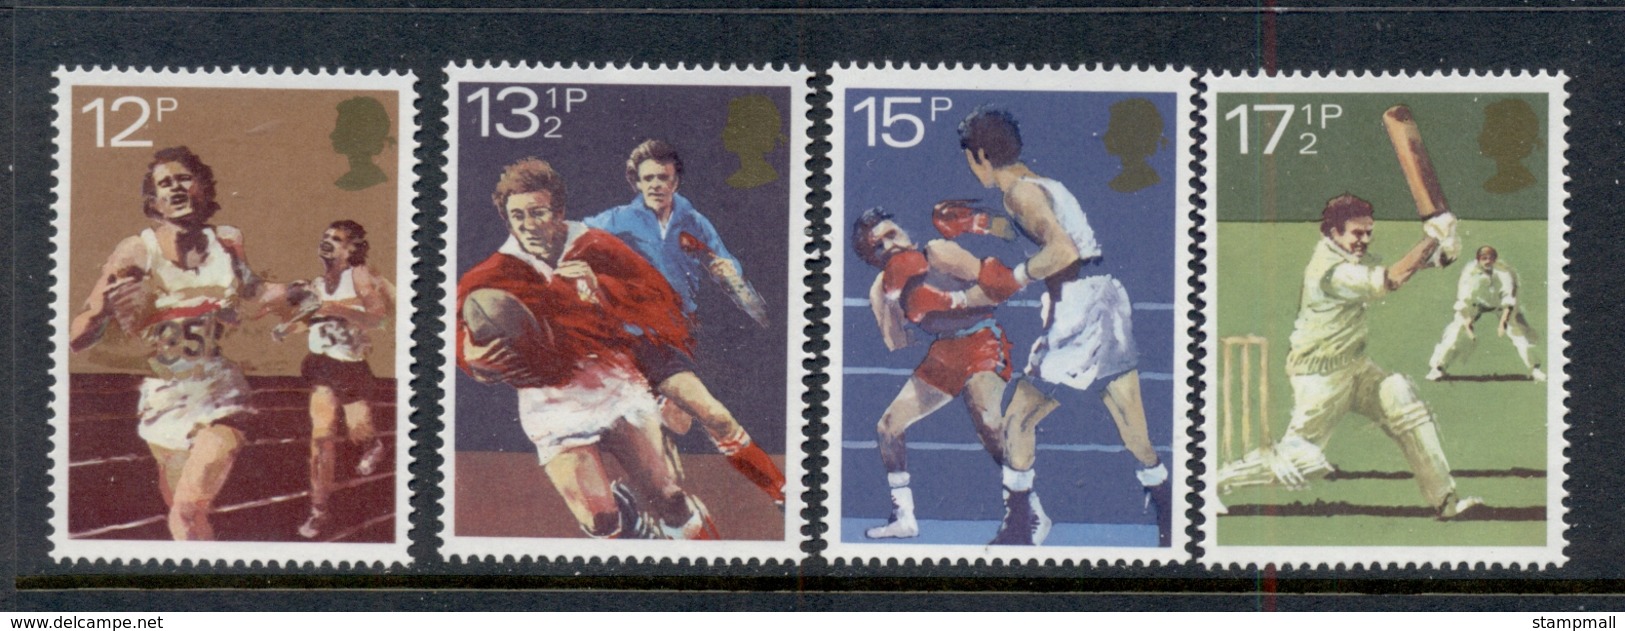 GB 1980 Sports Centenaries MUH - Unclassified